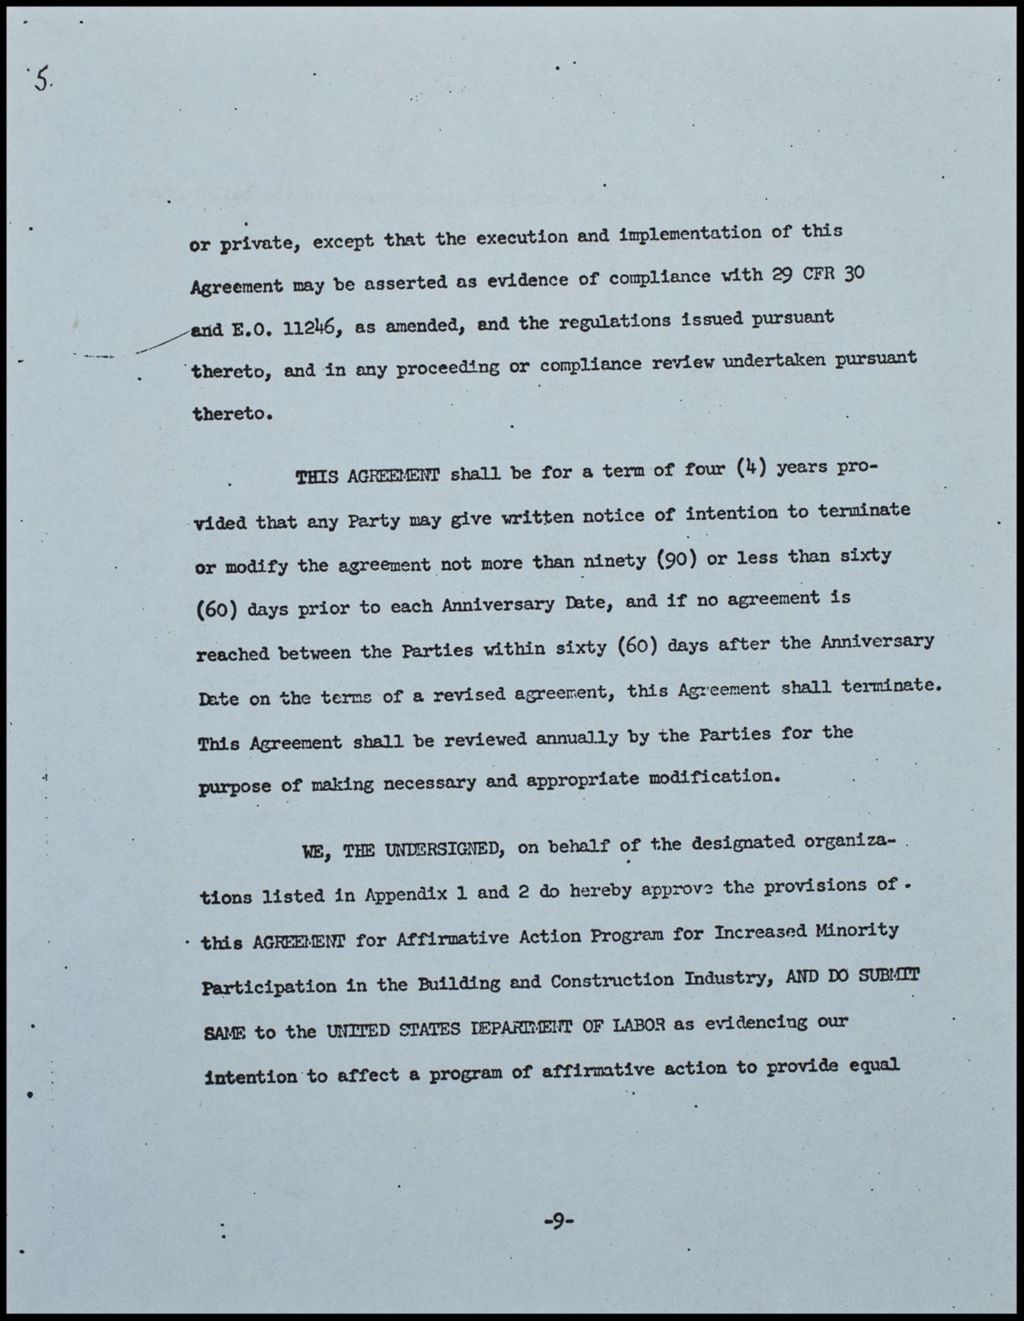 Miniature of Contract - Correspondence - Report, 1972 (Folder II-926)